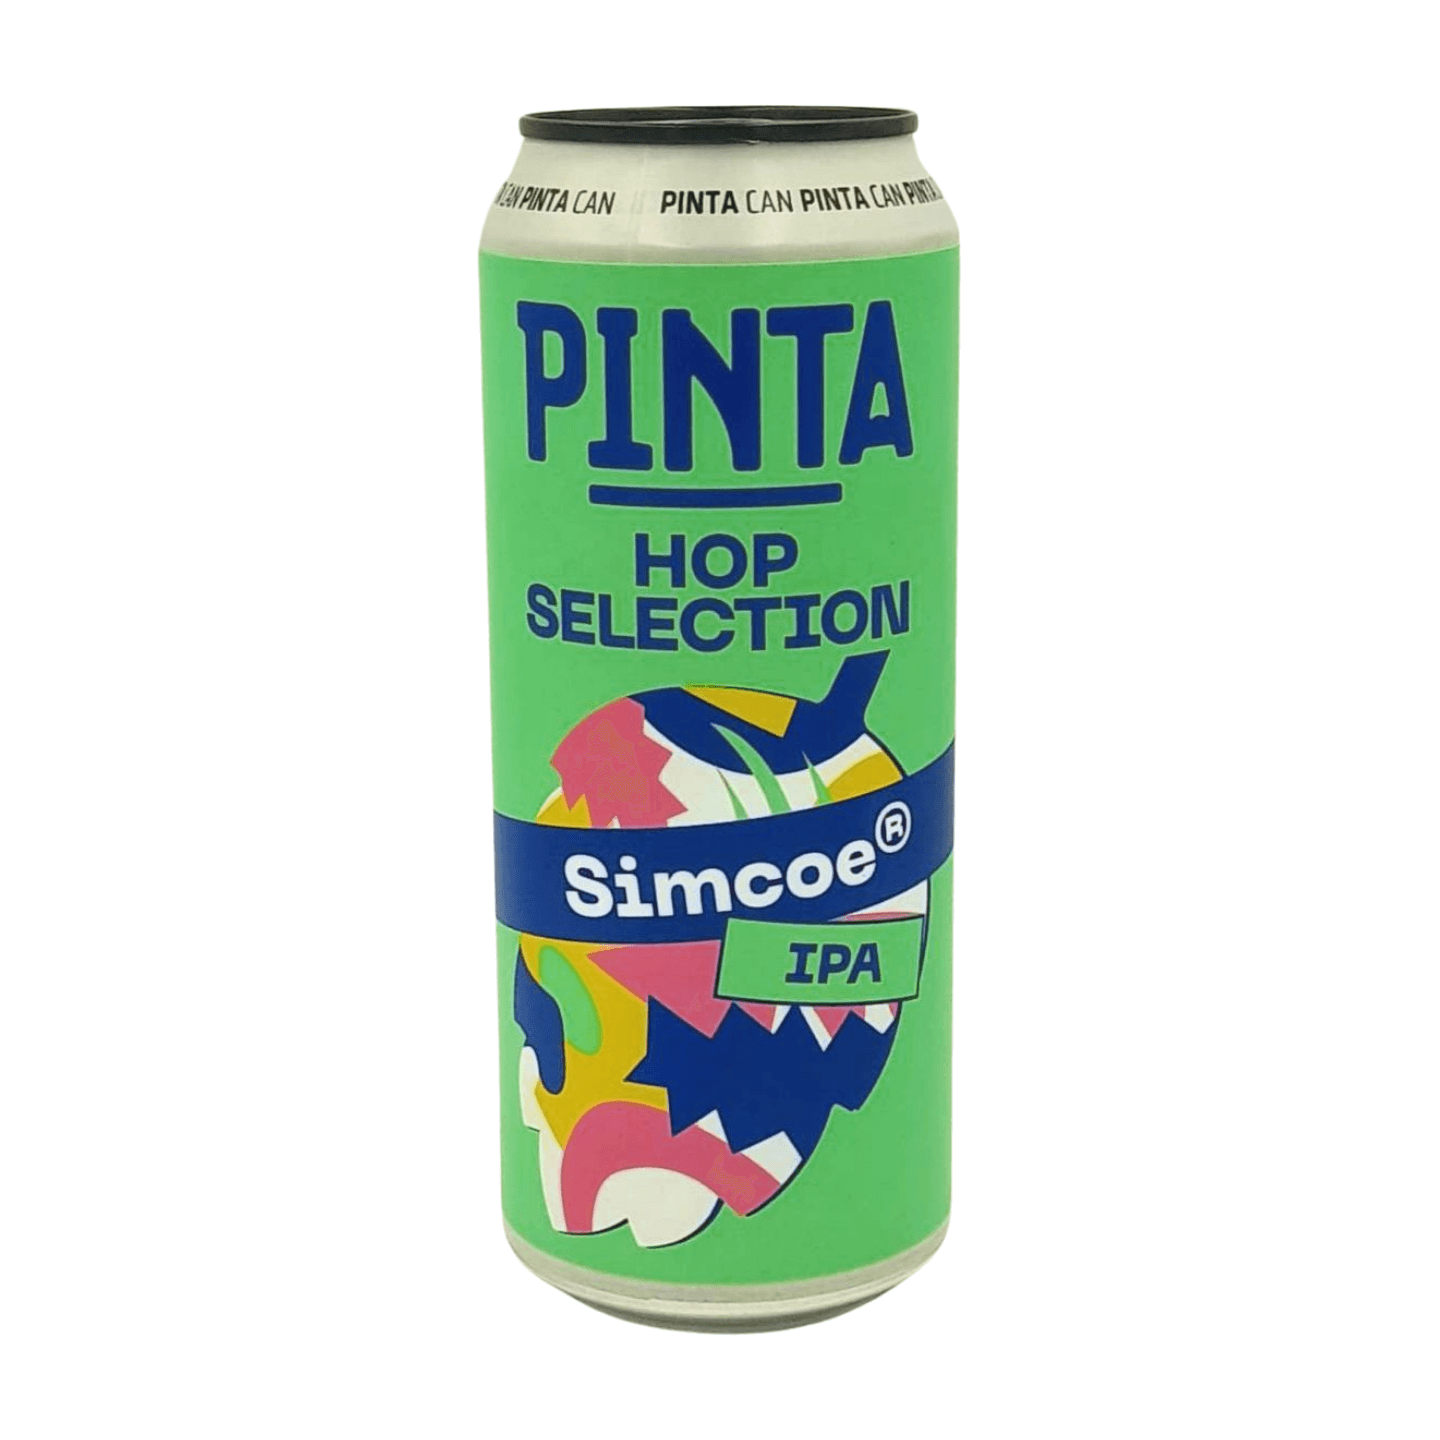 Pinta Hop Selection Simcoe | IPA Webshop Online Verdins Bierwinkel Rotterdam